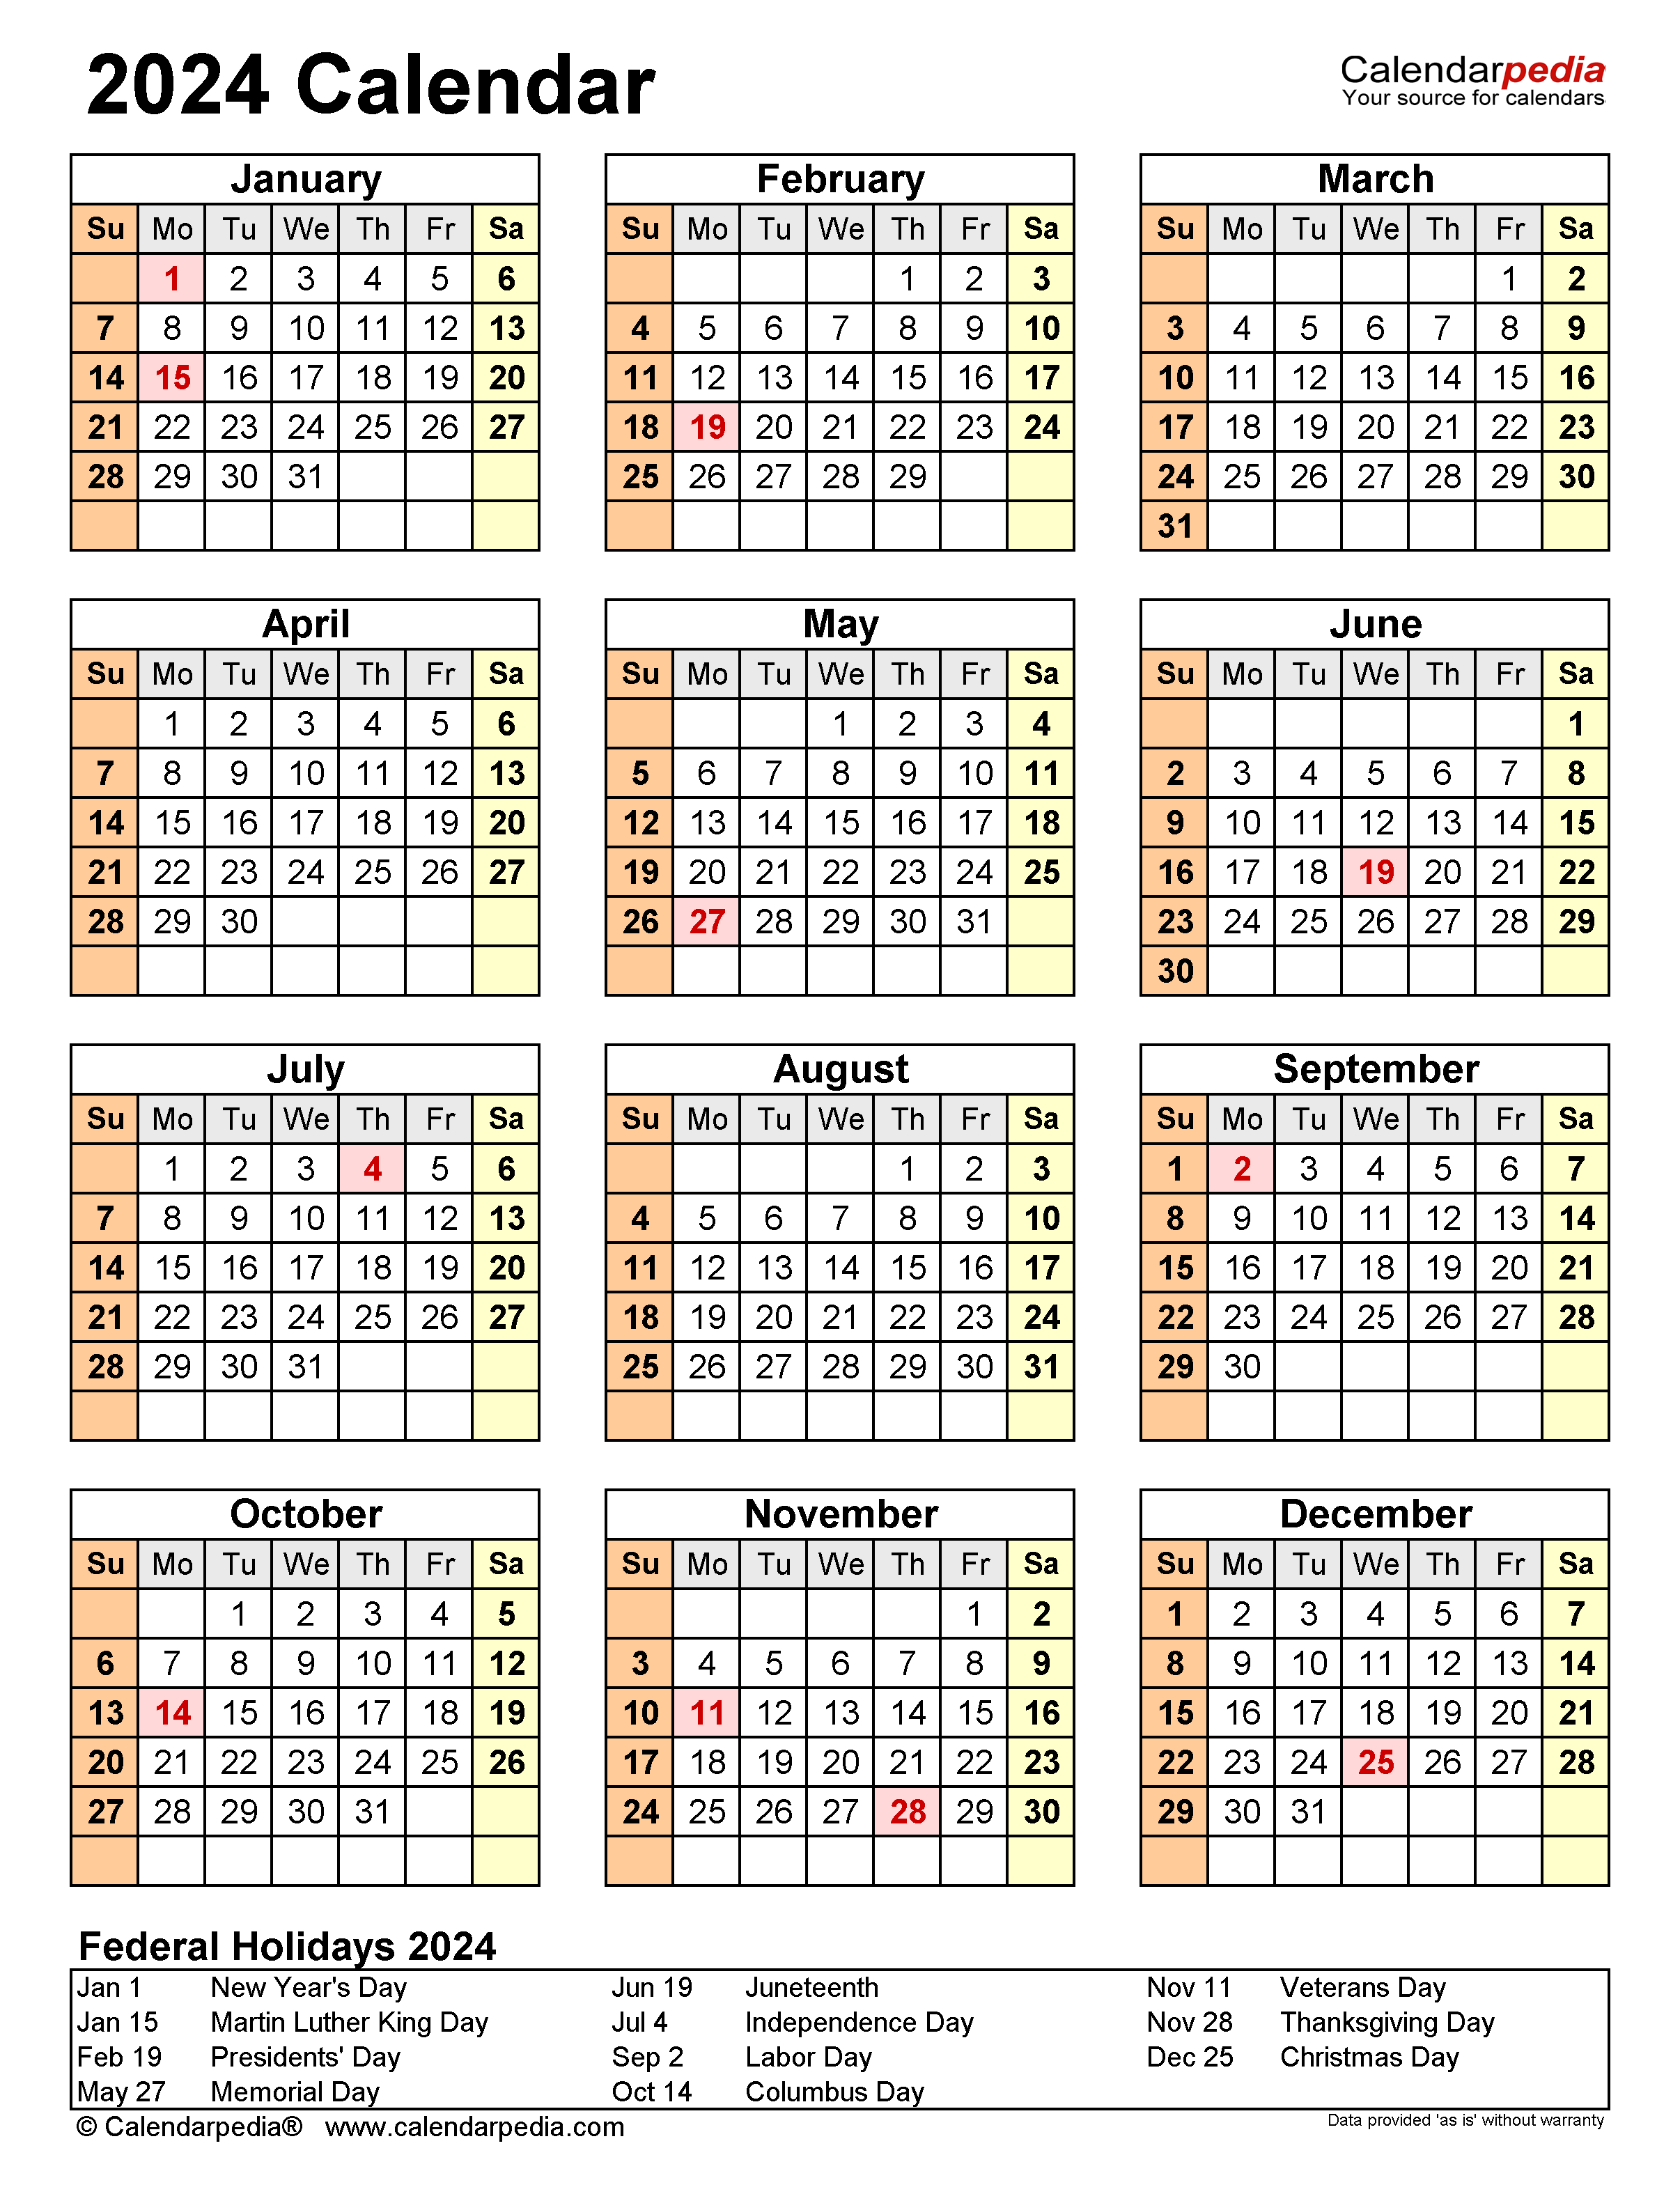 Free Printable 2024 Calendar With Holidays Crownflourmills | Free Printable 2024 Calendar With Holidays In Word